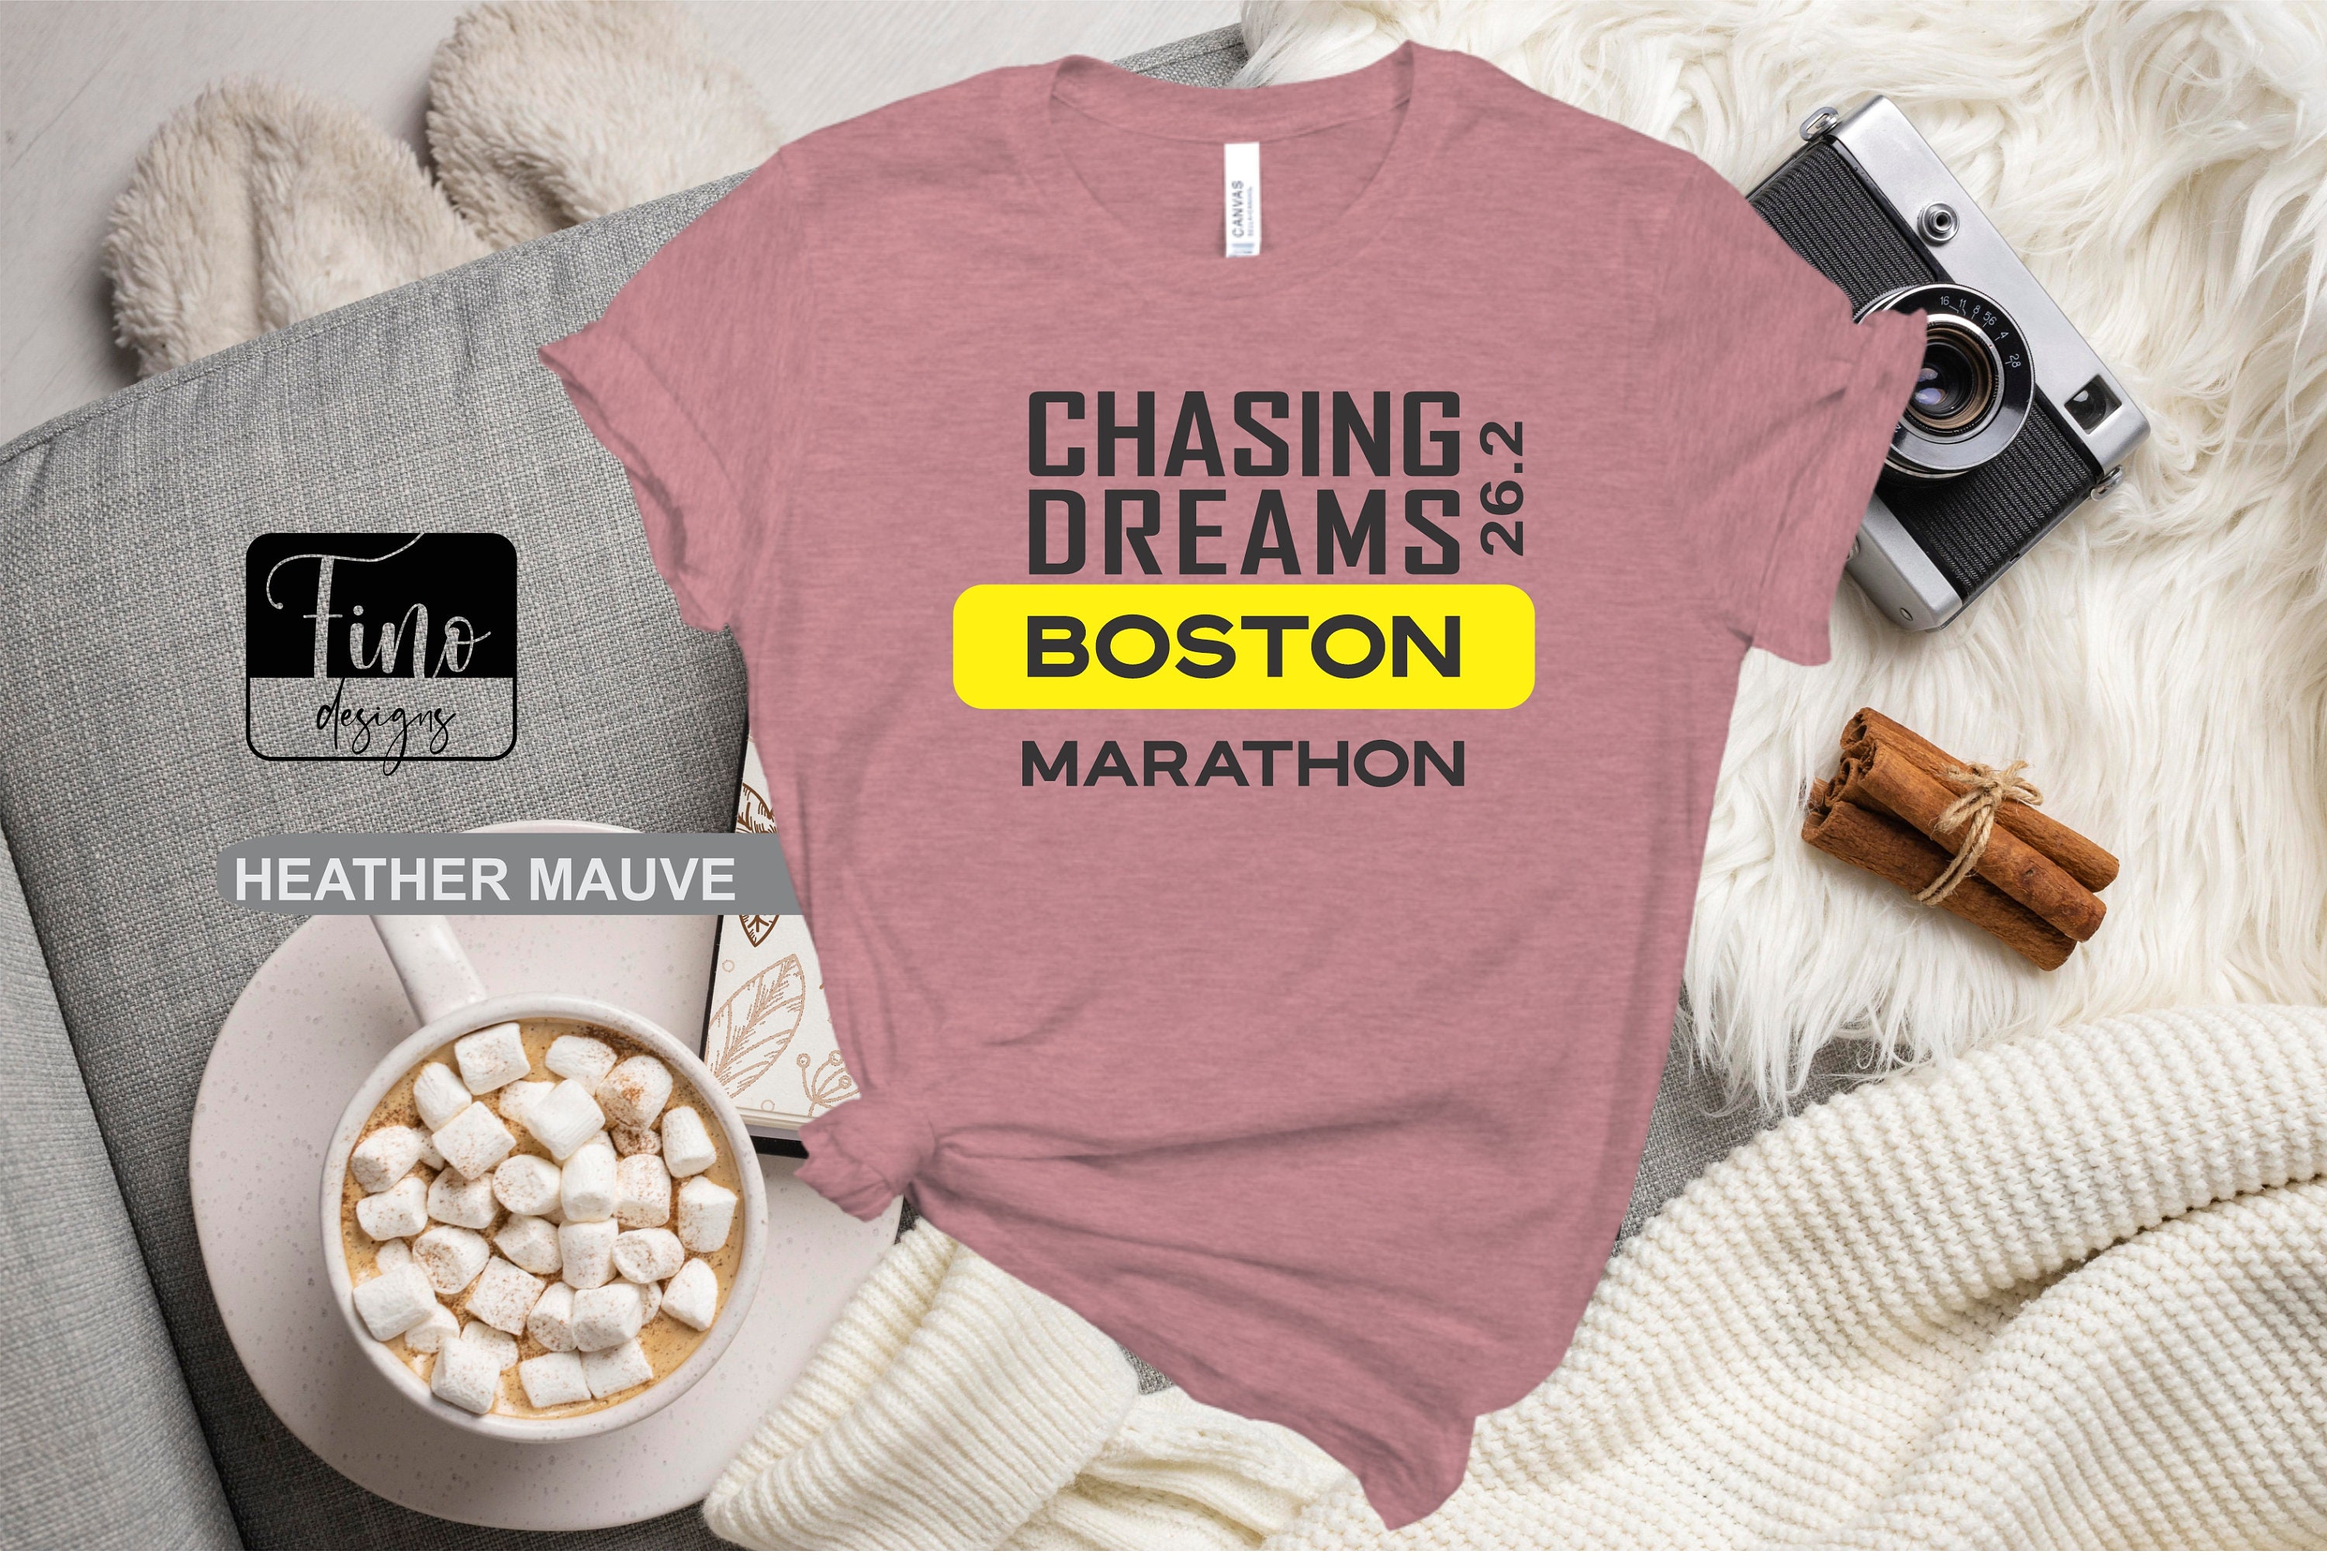 Blank Canvas merch Custom Boston Marathon Supporter T-Shirt Medium